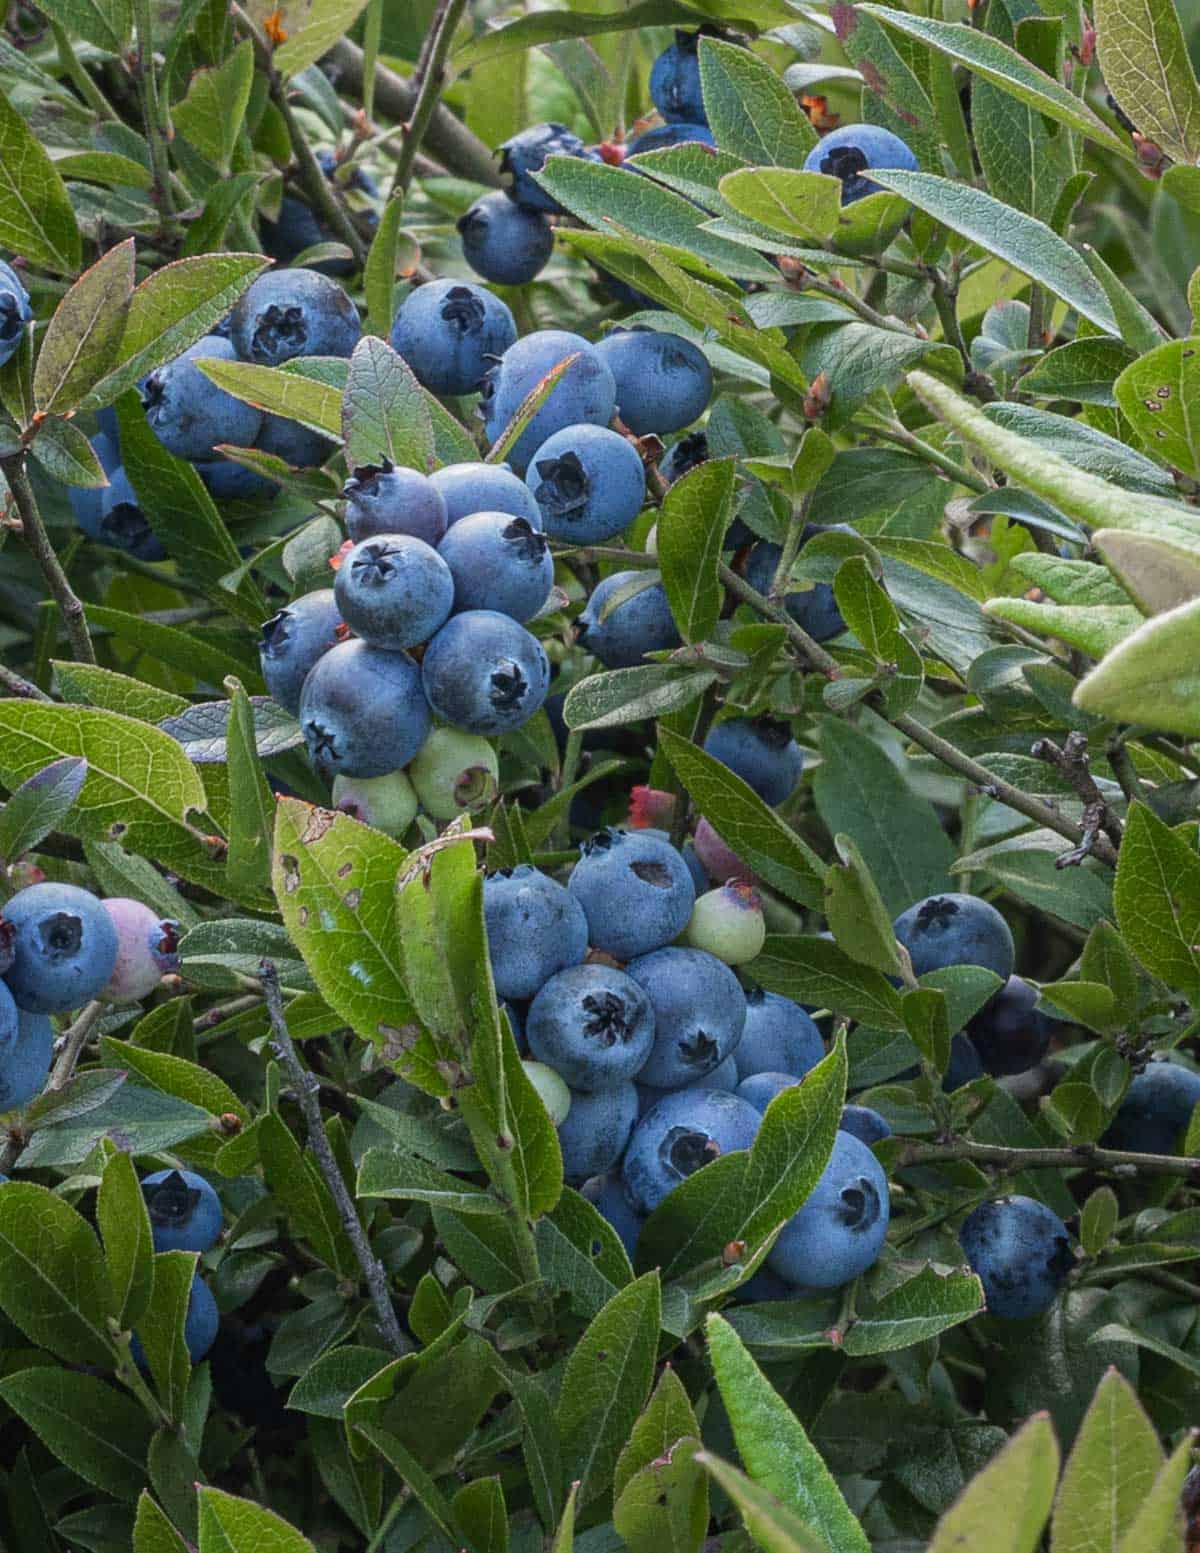 ripe clusters of wild blueberries Vaccinium angustifolium ready to harvest. 